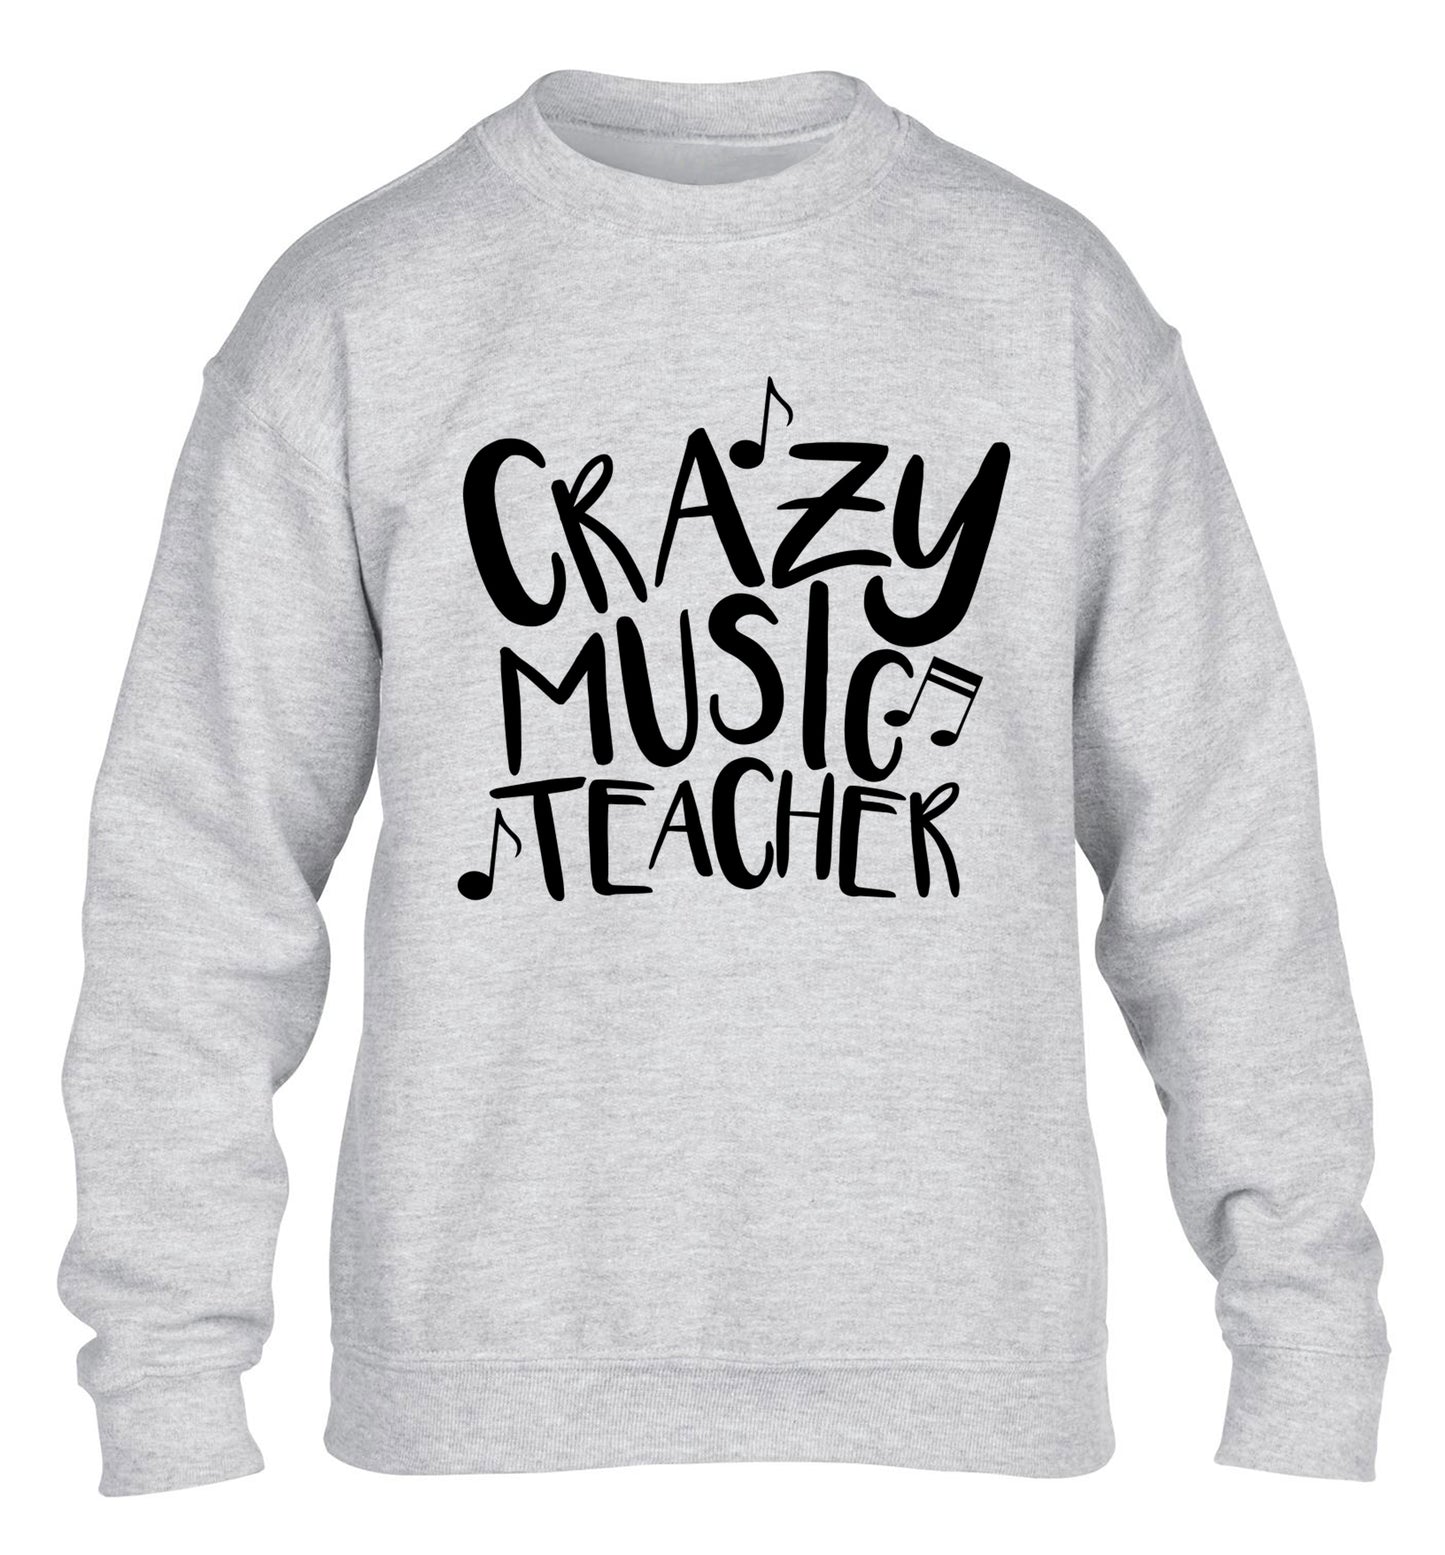 Crazy music teacher children's grey sweater 12-13 Years